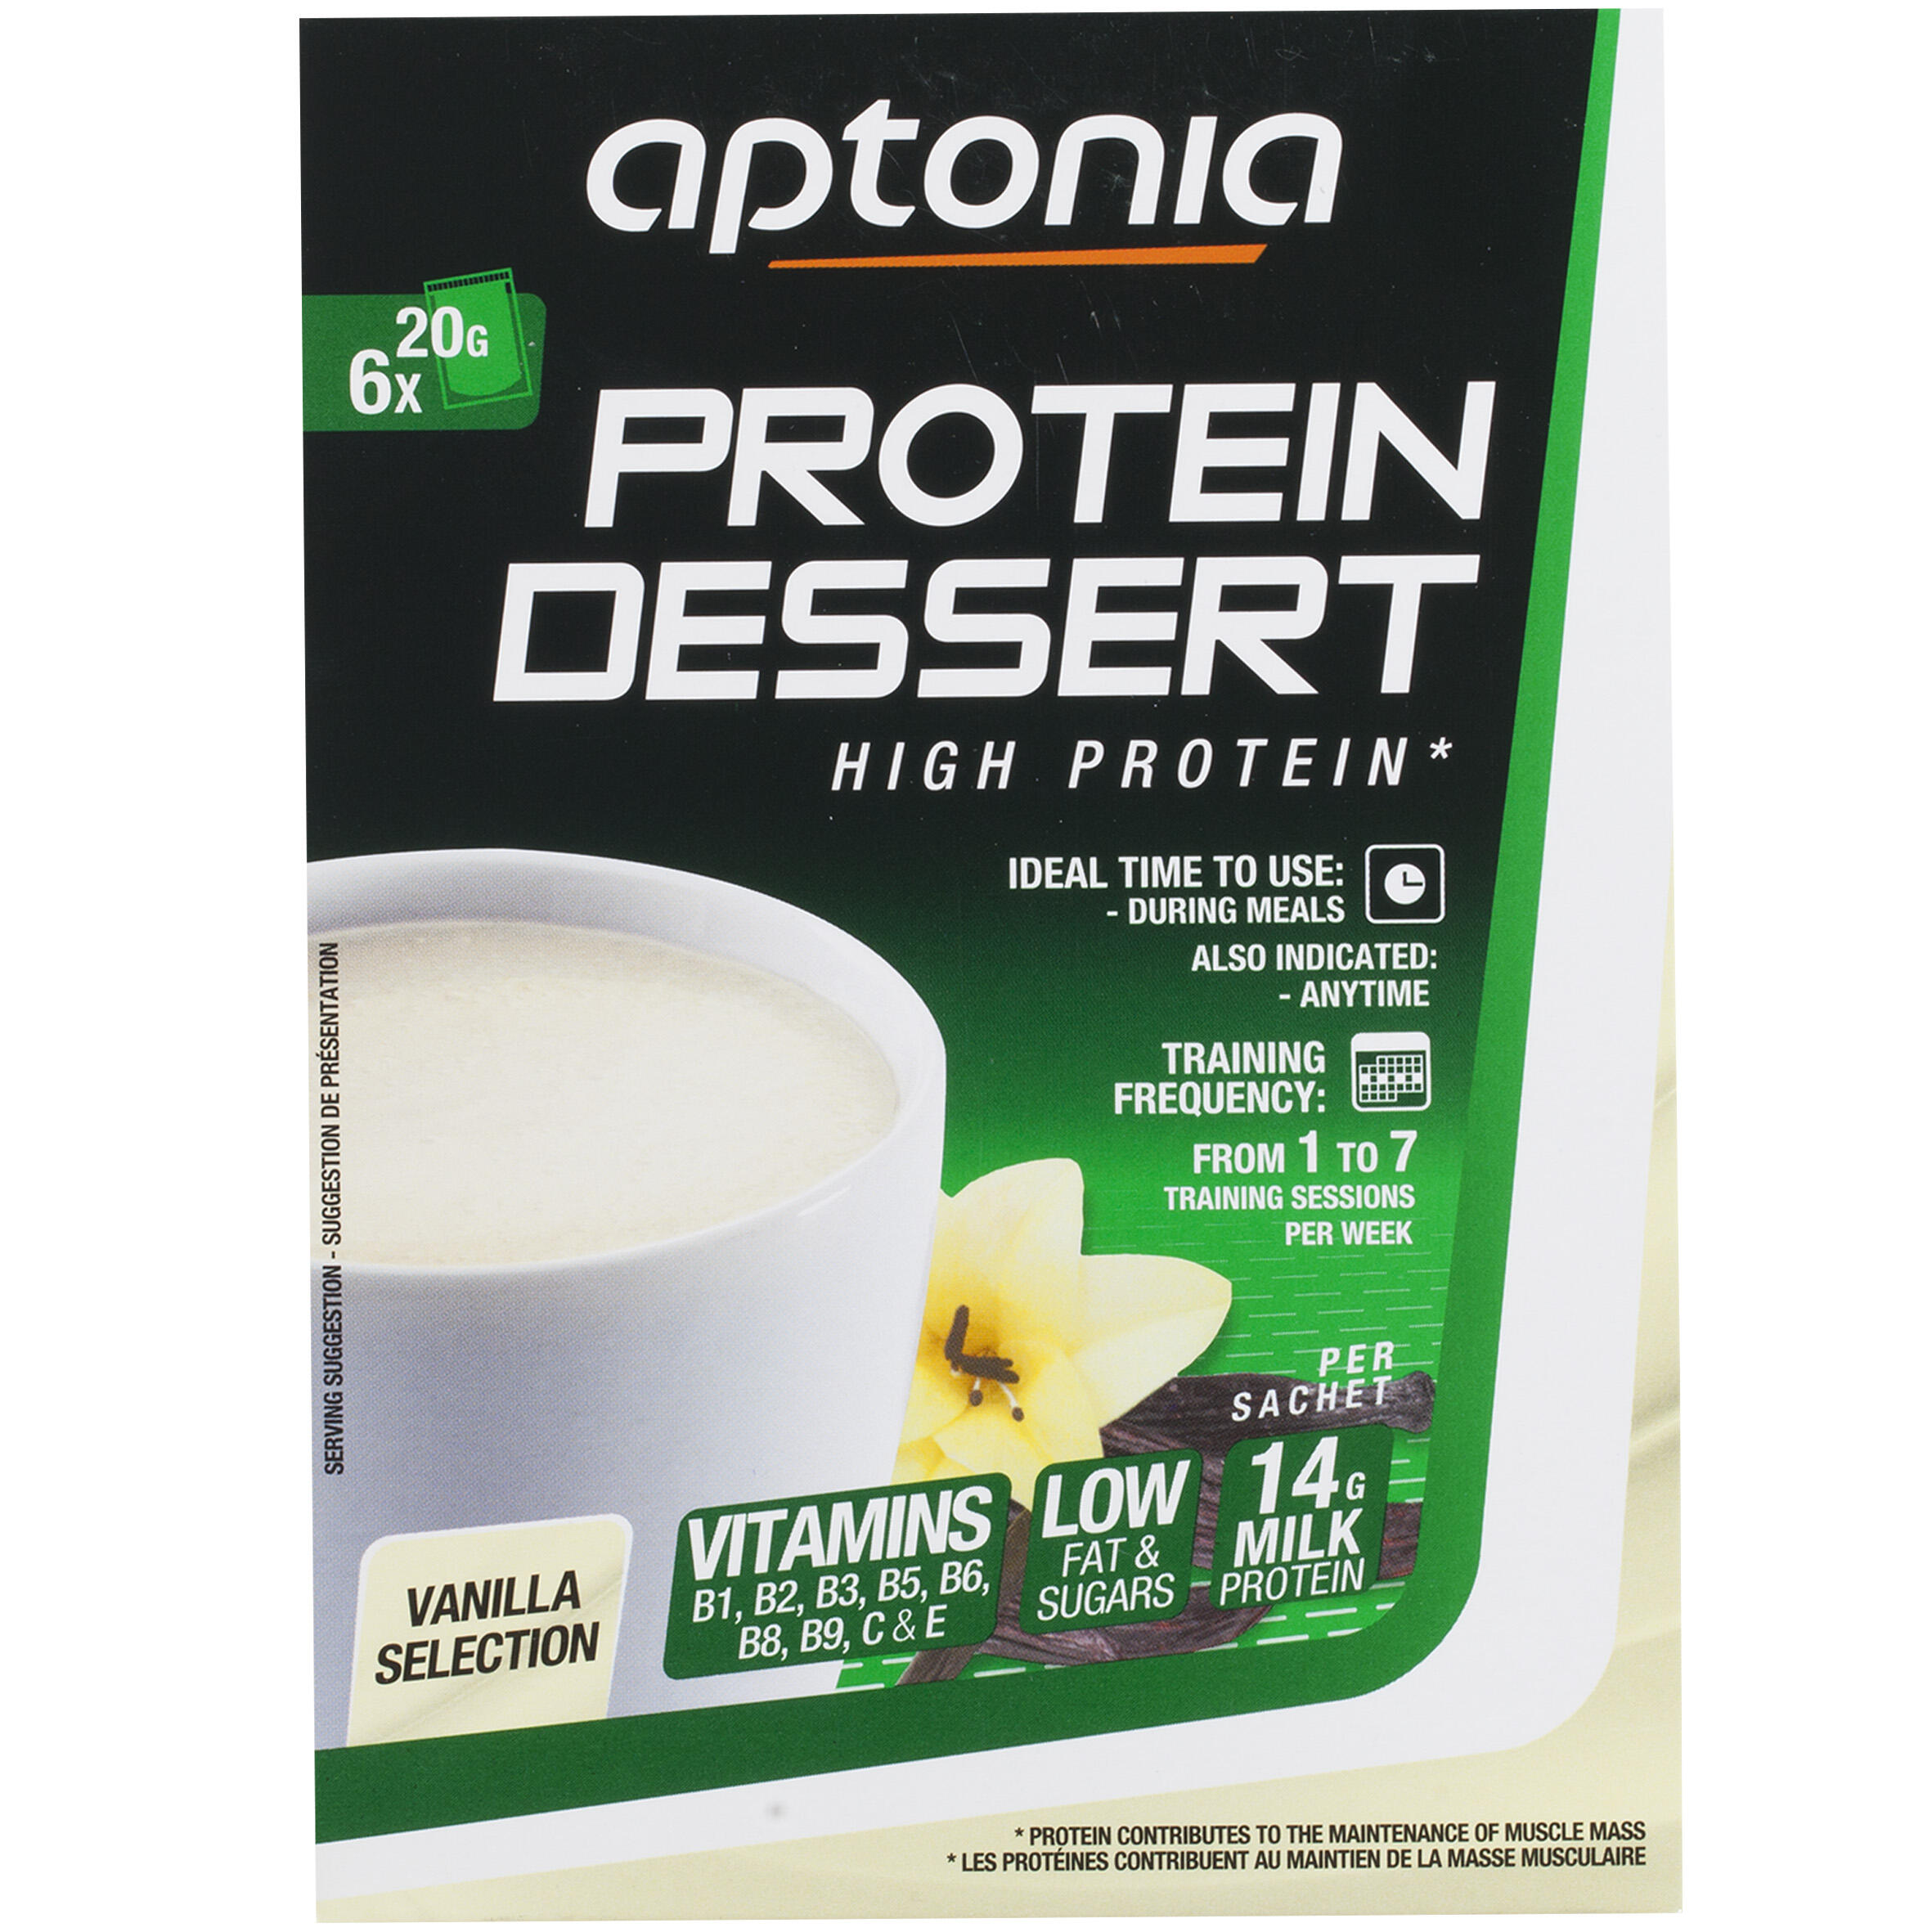 APTONIA Protein Dessert Low Calorie High Protein Snack 6x20g - Vanilla